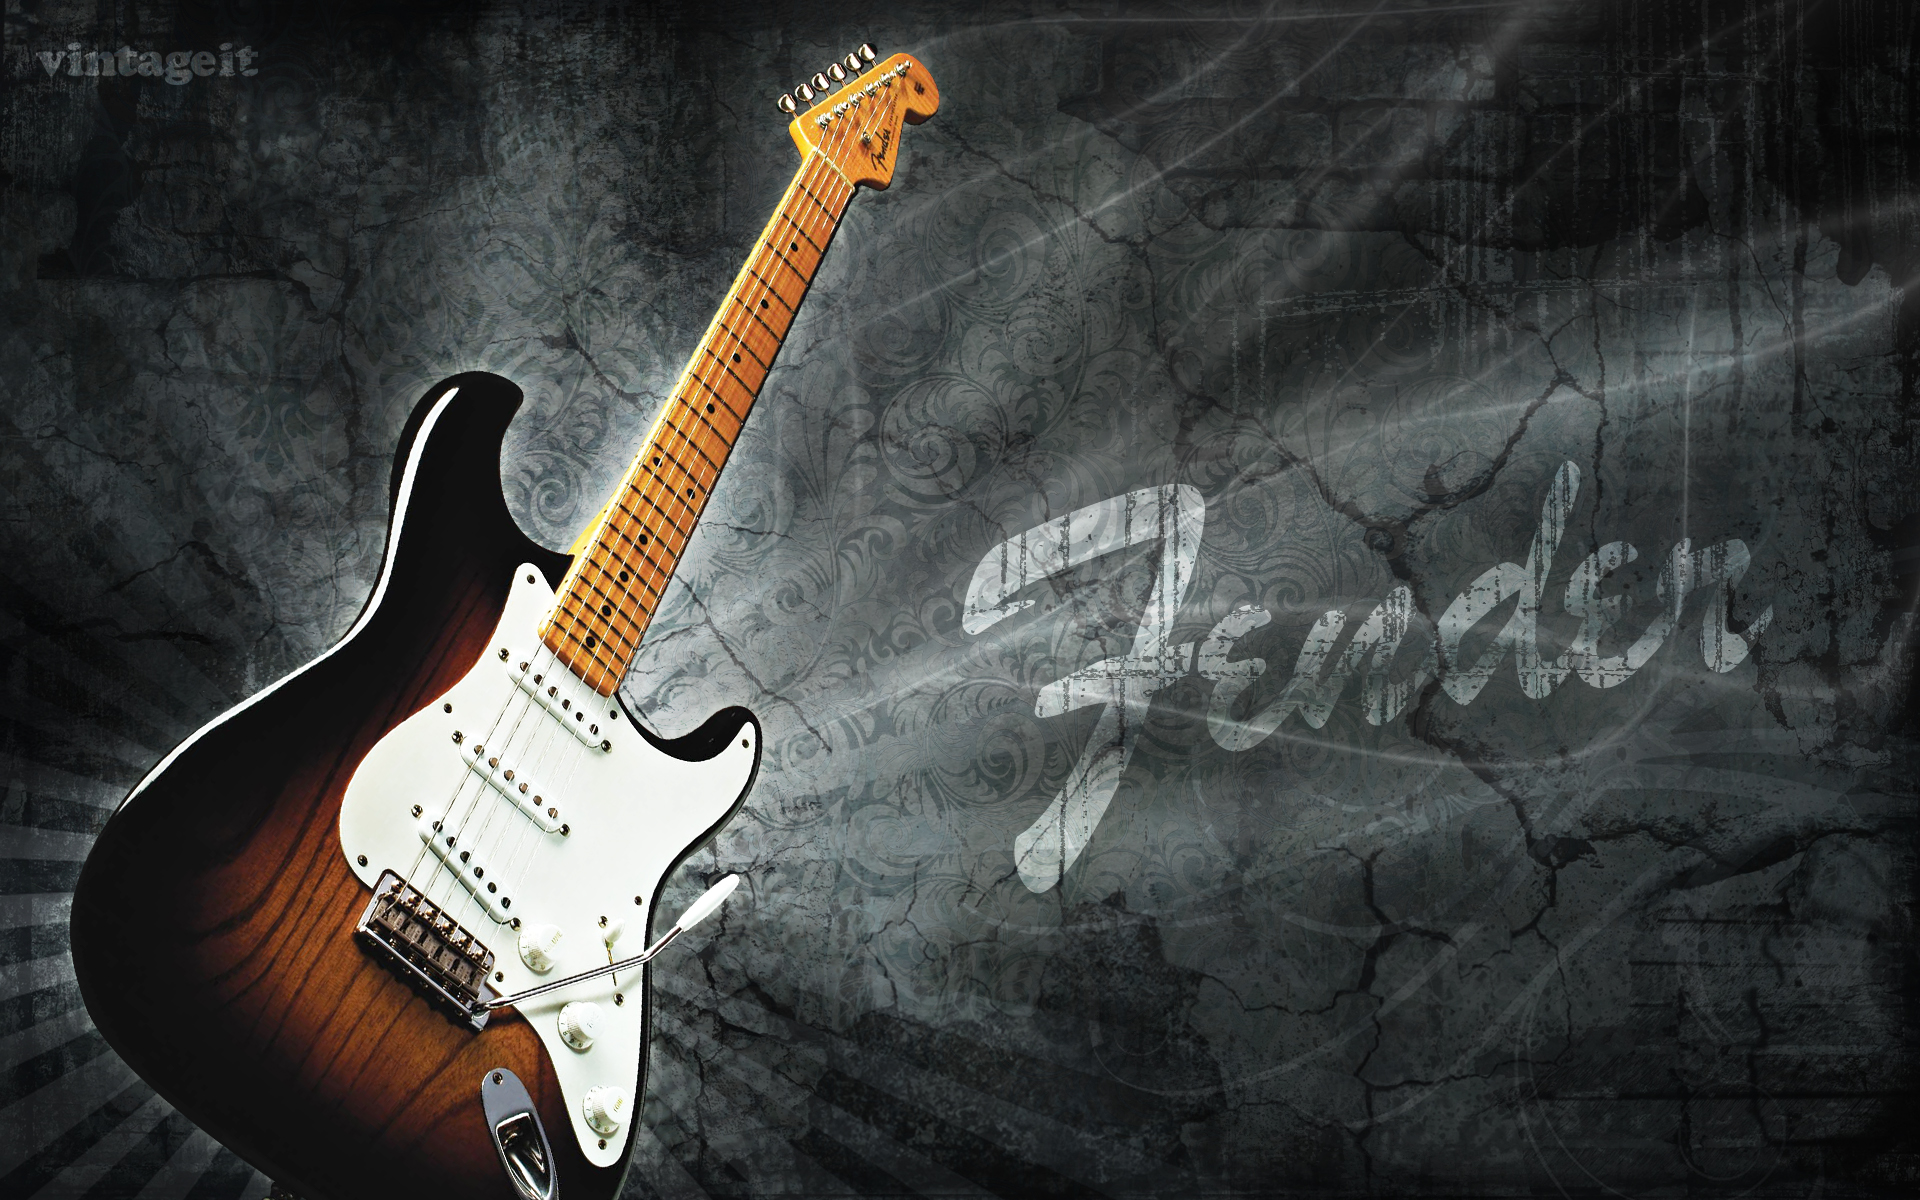 Fender Stratocaster Wallpaper Desktop HD iPad iPhone